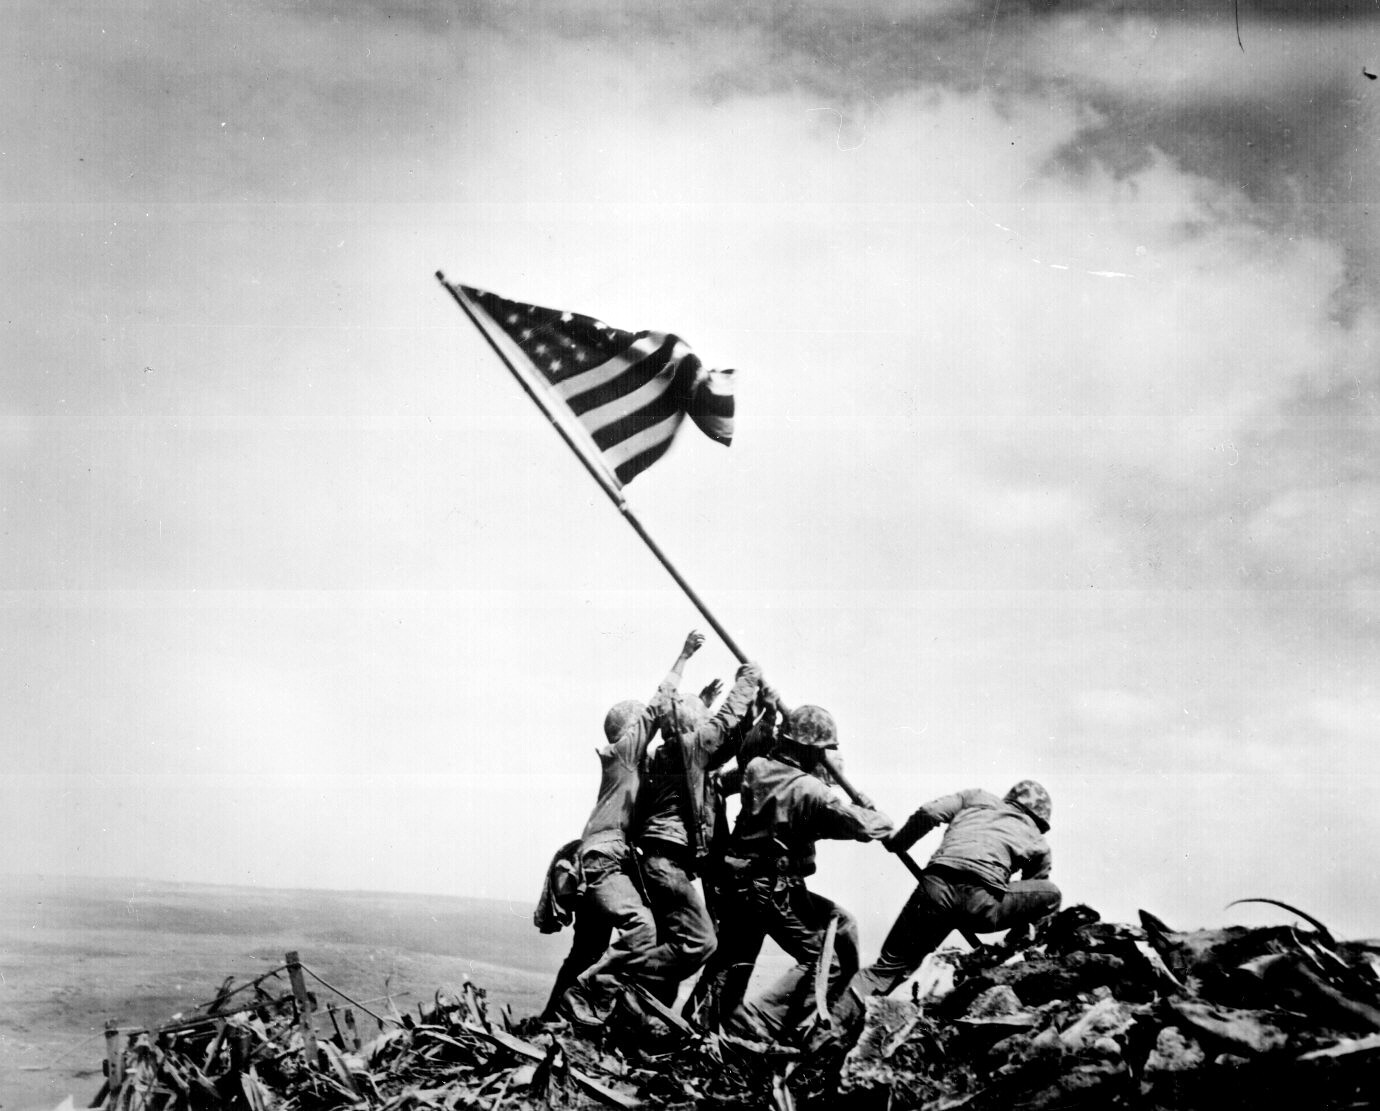 Raising the flag at Iwo Jima.